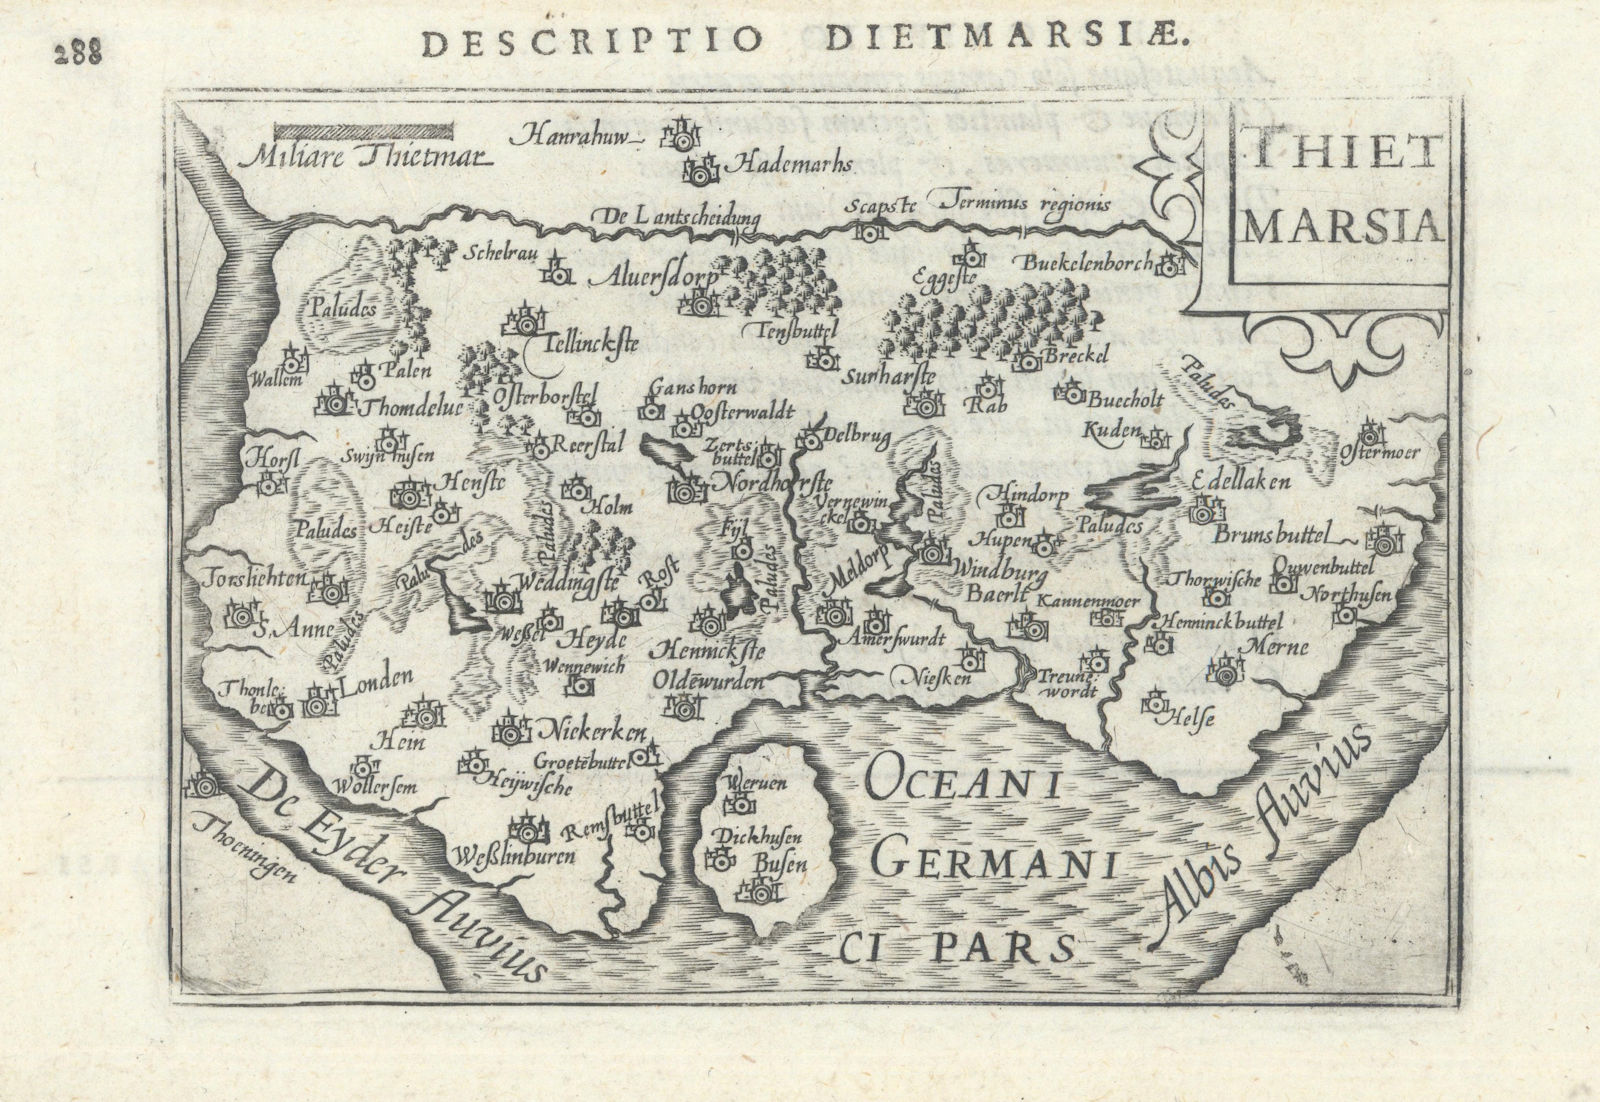 Thietmarsia by Bertius / Langenes. Dithmarschen, Schleswig-Holstein 1603 map